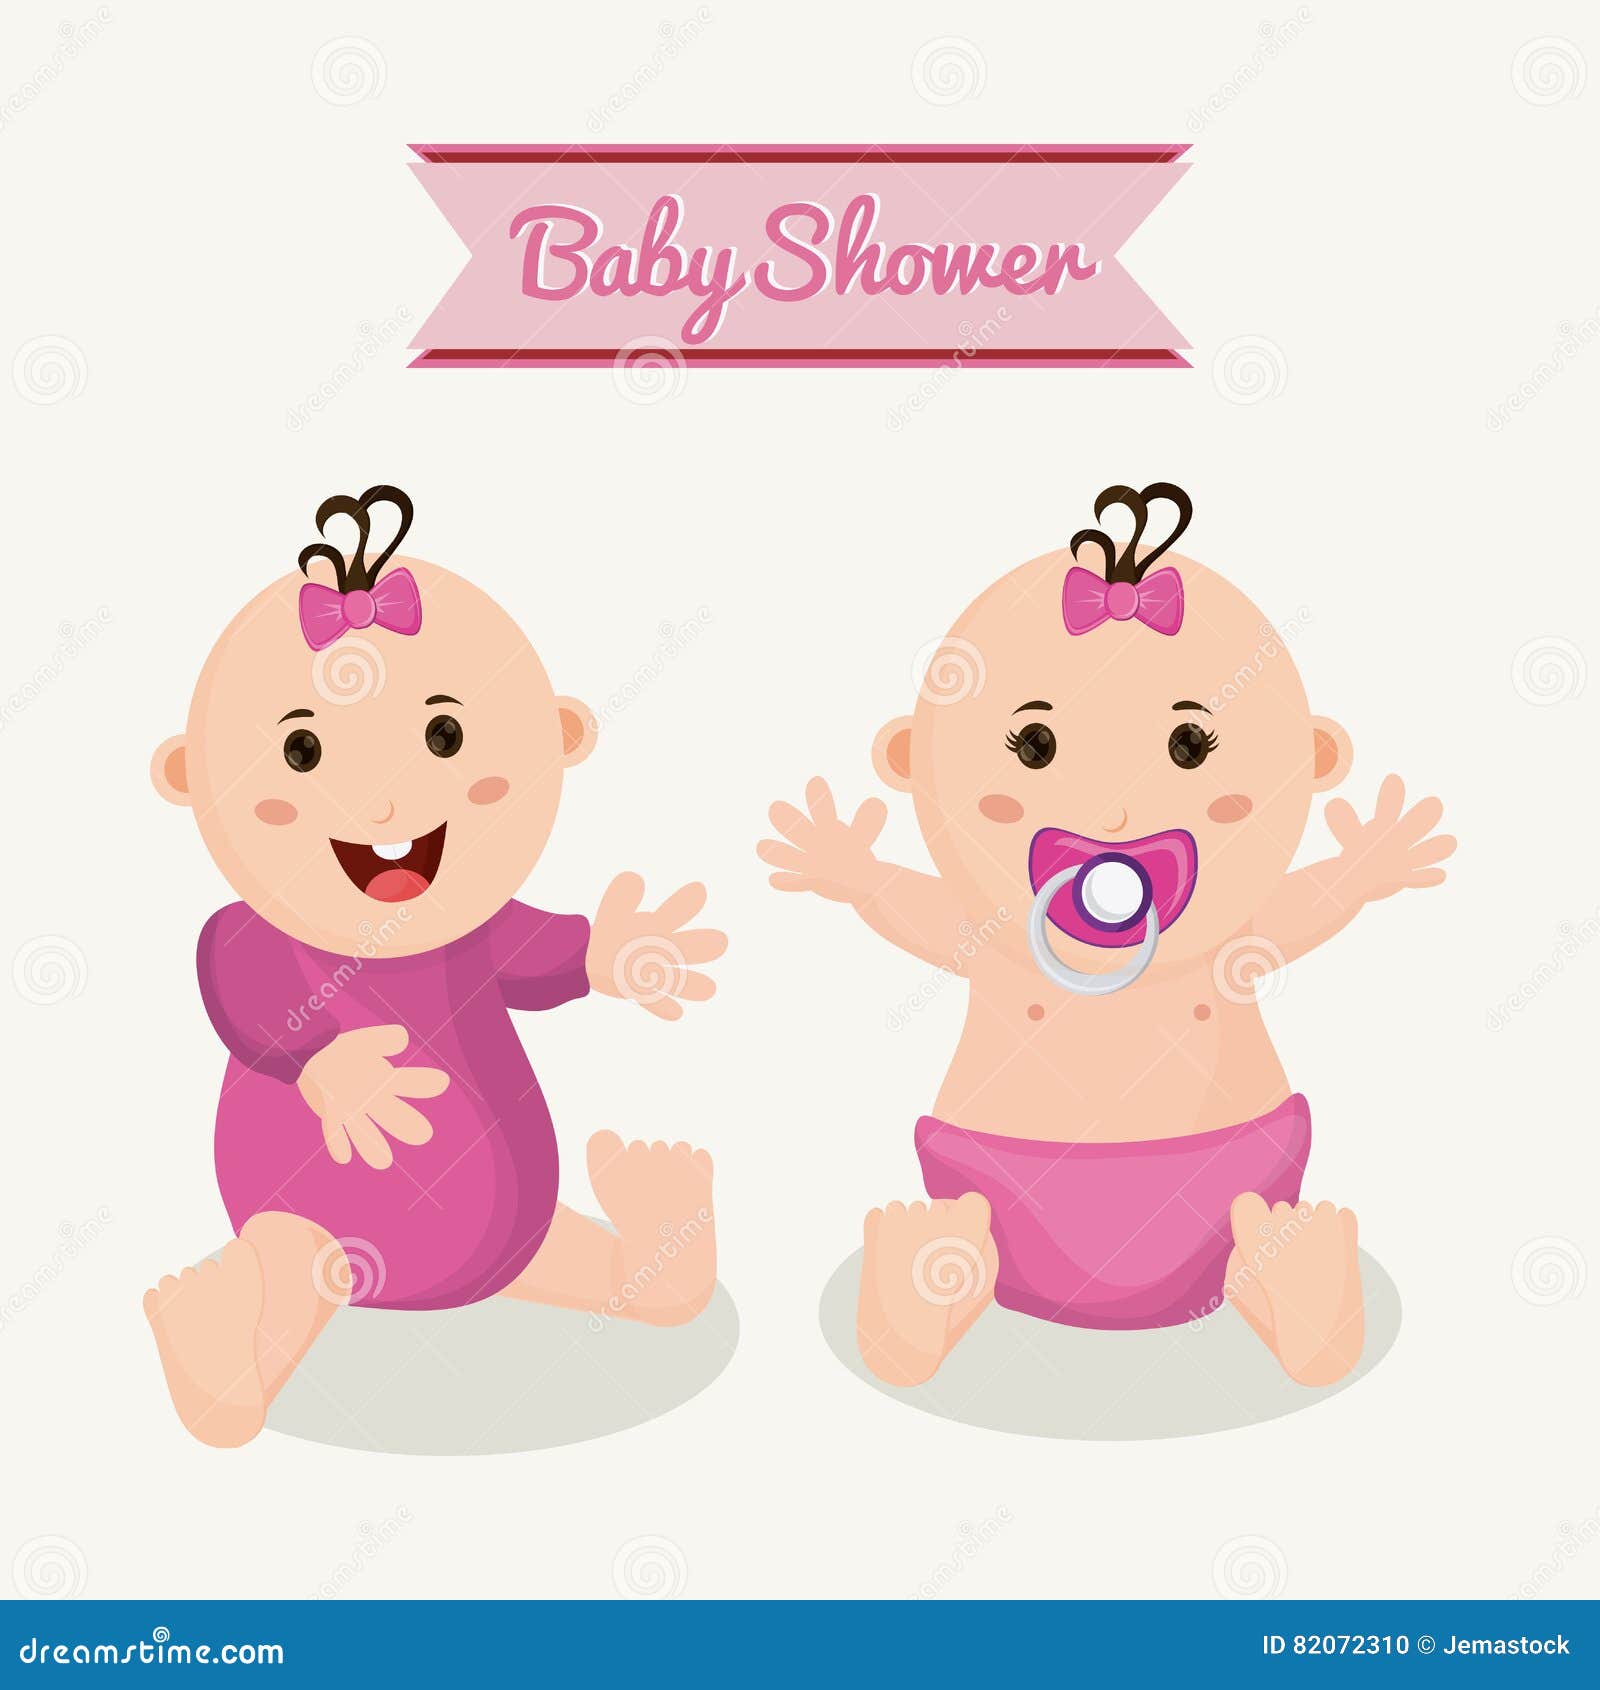 Baby Boy Cartoon of Baby Shower Concept Stock Vector - Illustration of ...